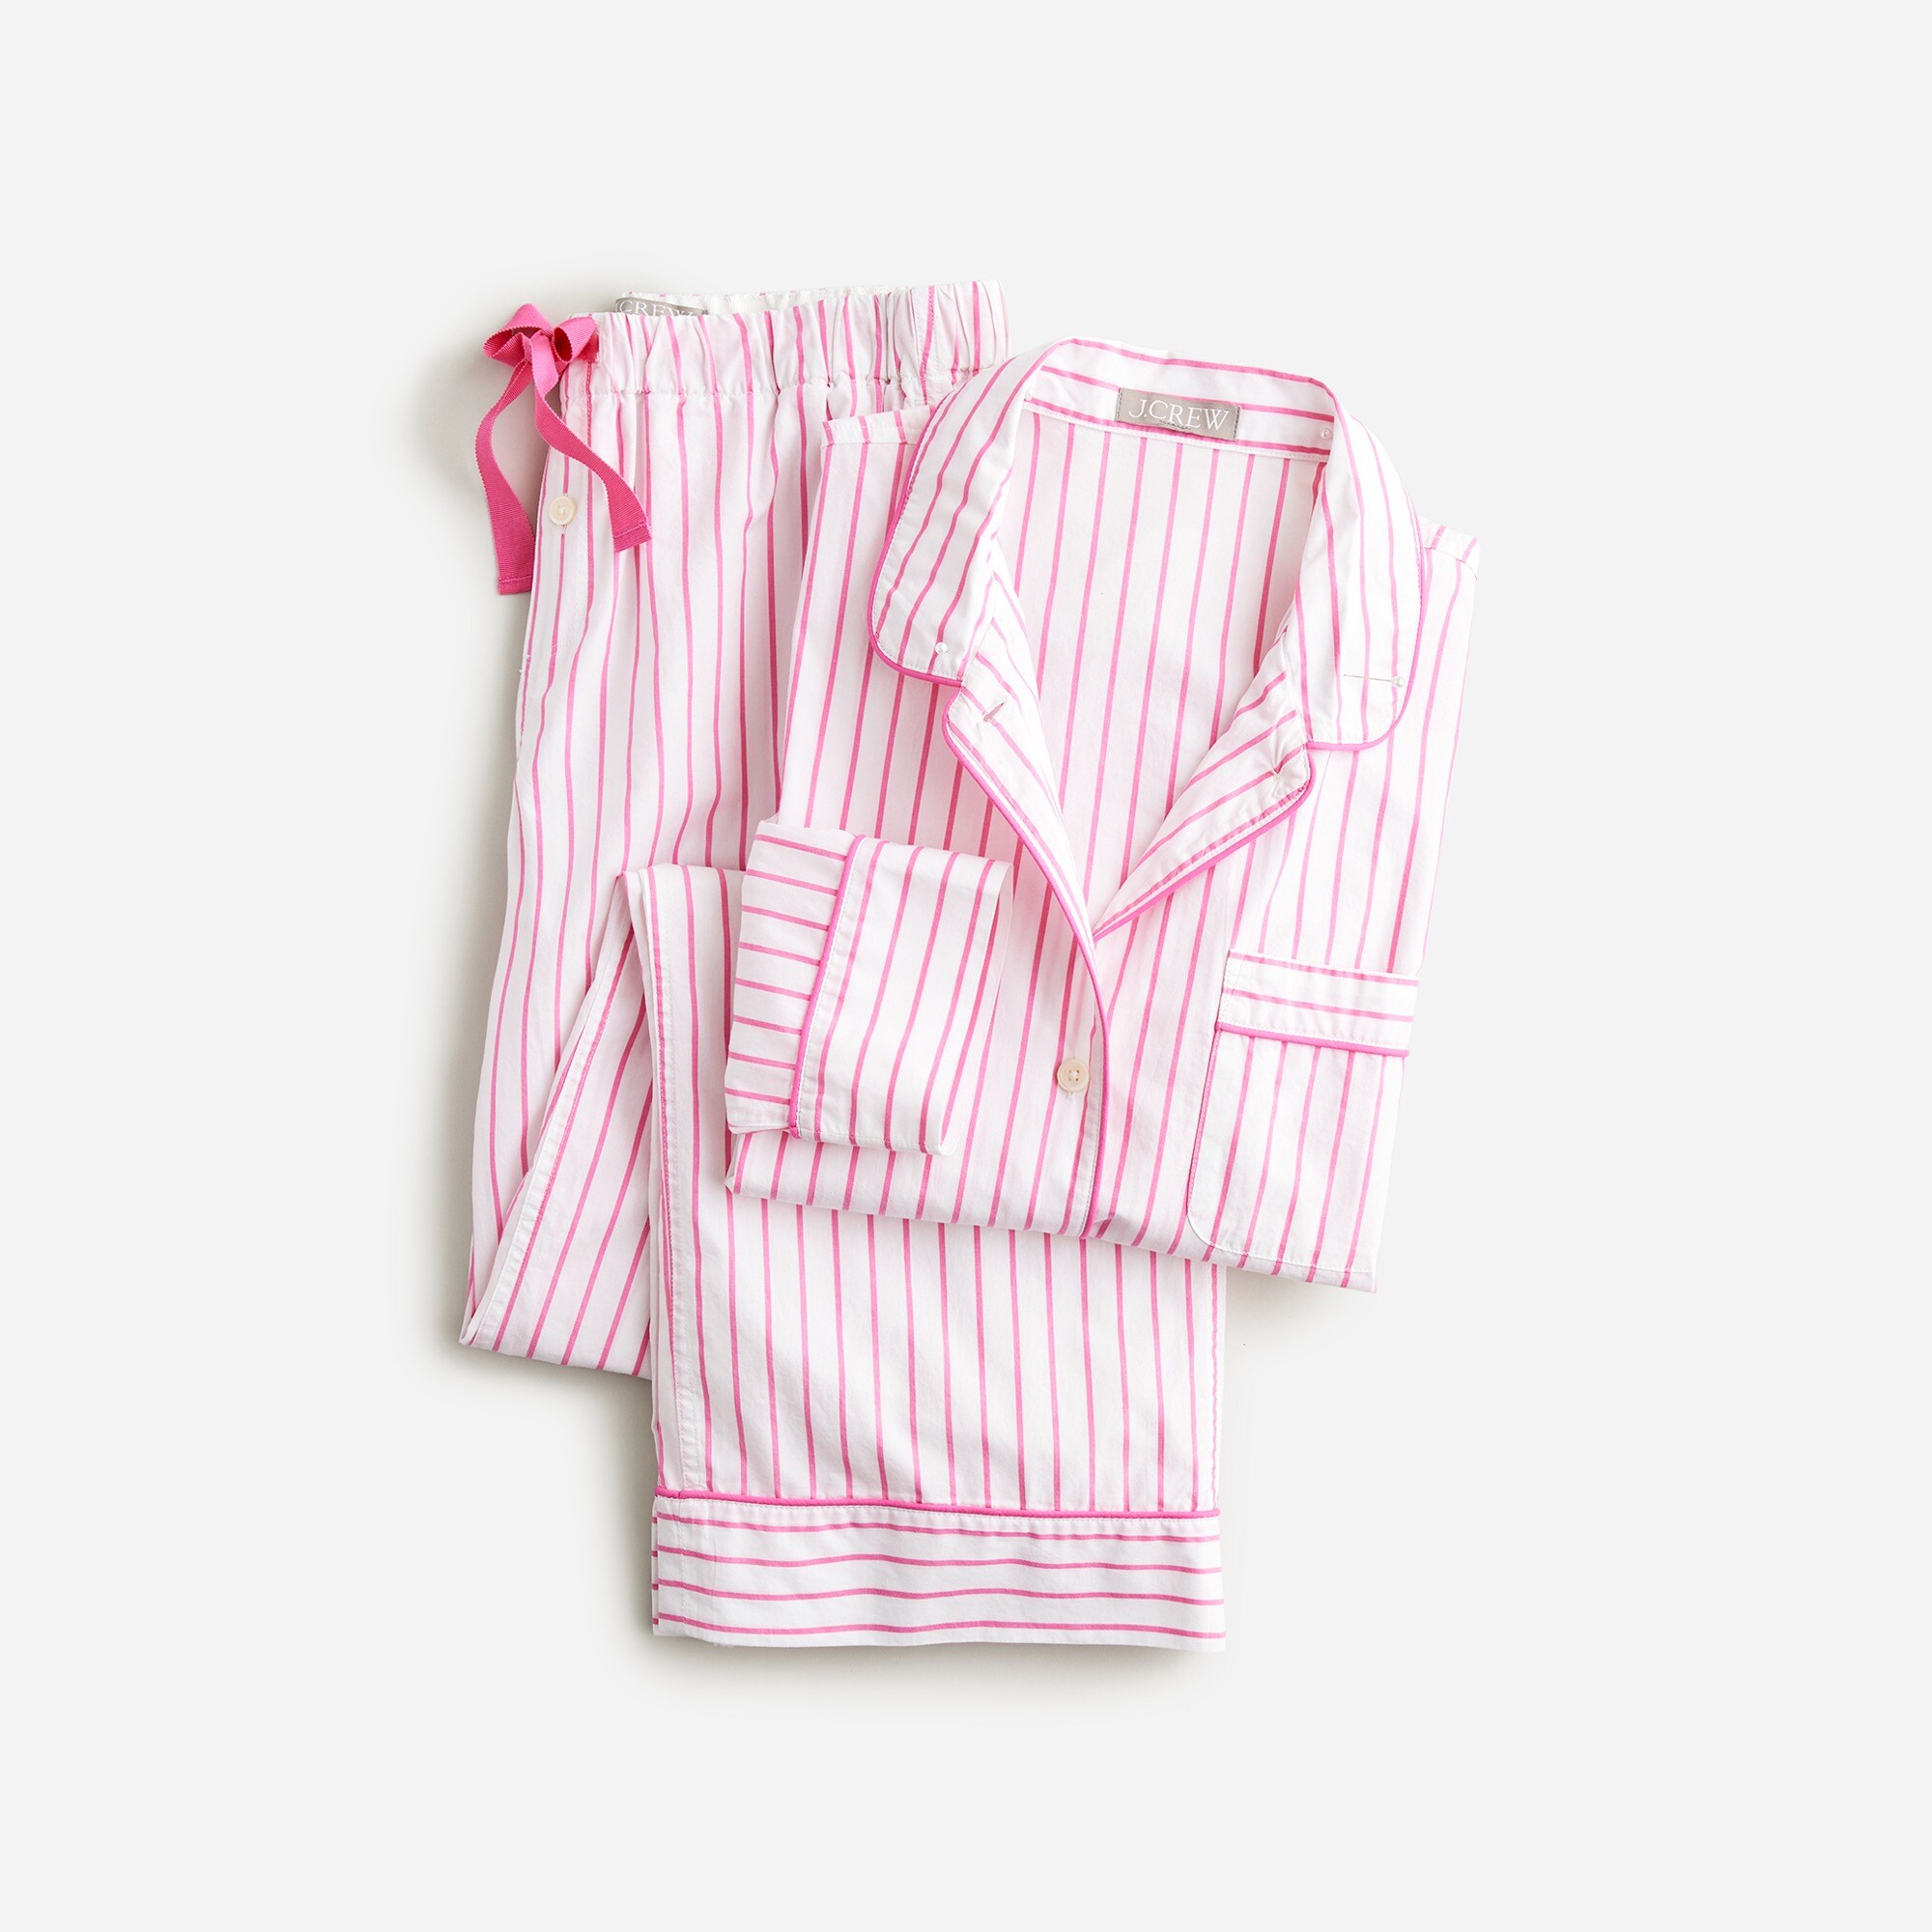  Long-sleeve cotton poplin pajama pant set in stripe